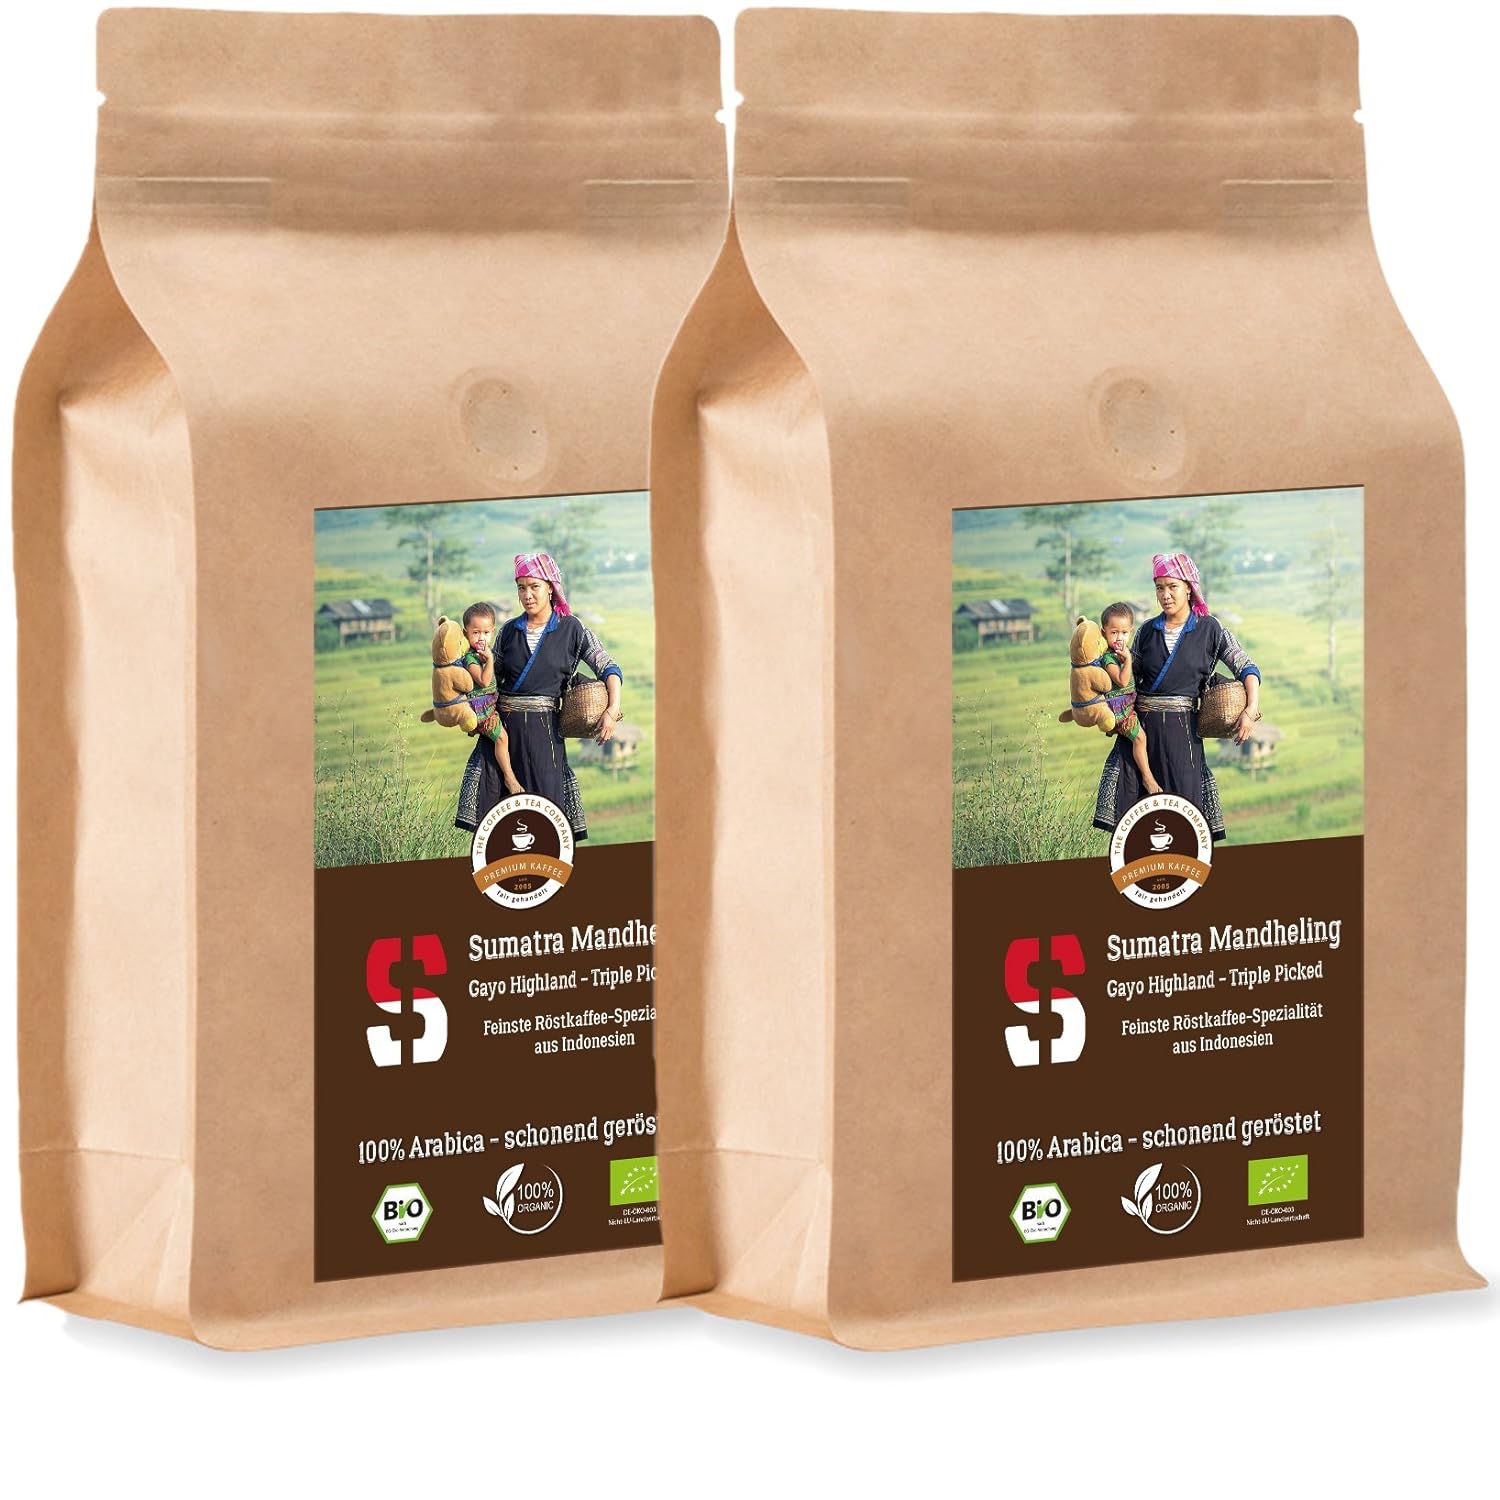 Coffee Globetrotter - Sumatra Mandheling Gayo Highland - Organic - 2 x 1000 g Fine Ground - for Fully Automatic Coffee Grinder - Roasted Coffee from Organic Cultivation | Refill Pack Economy Pack